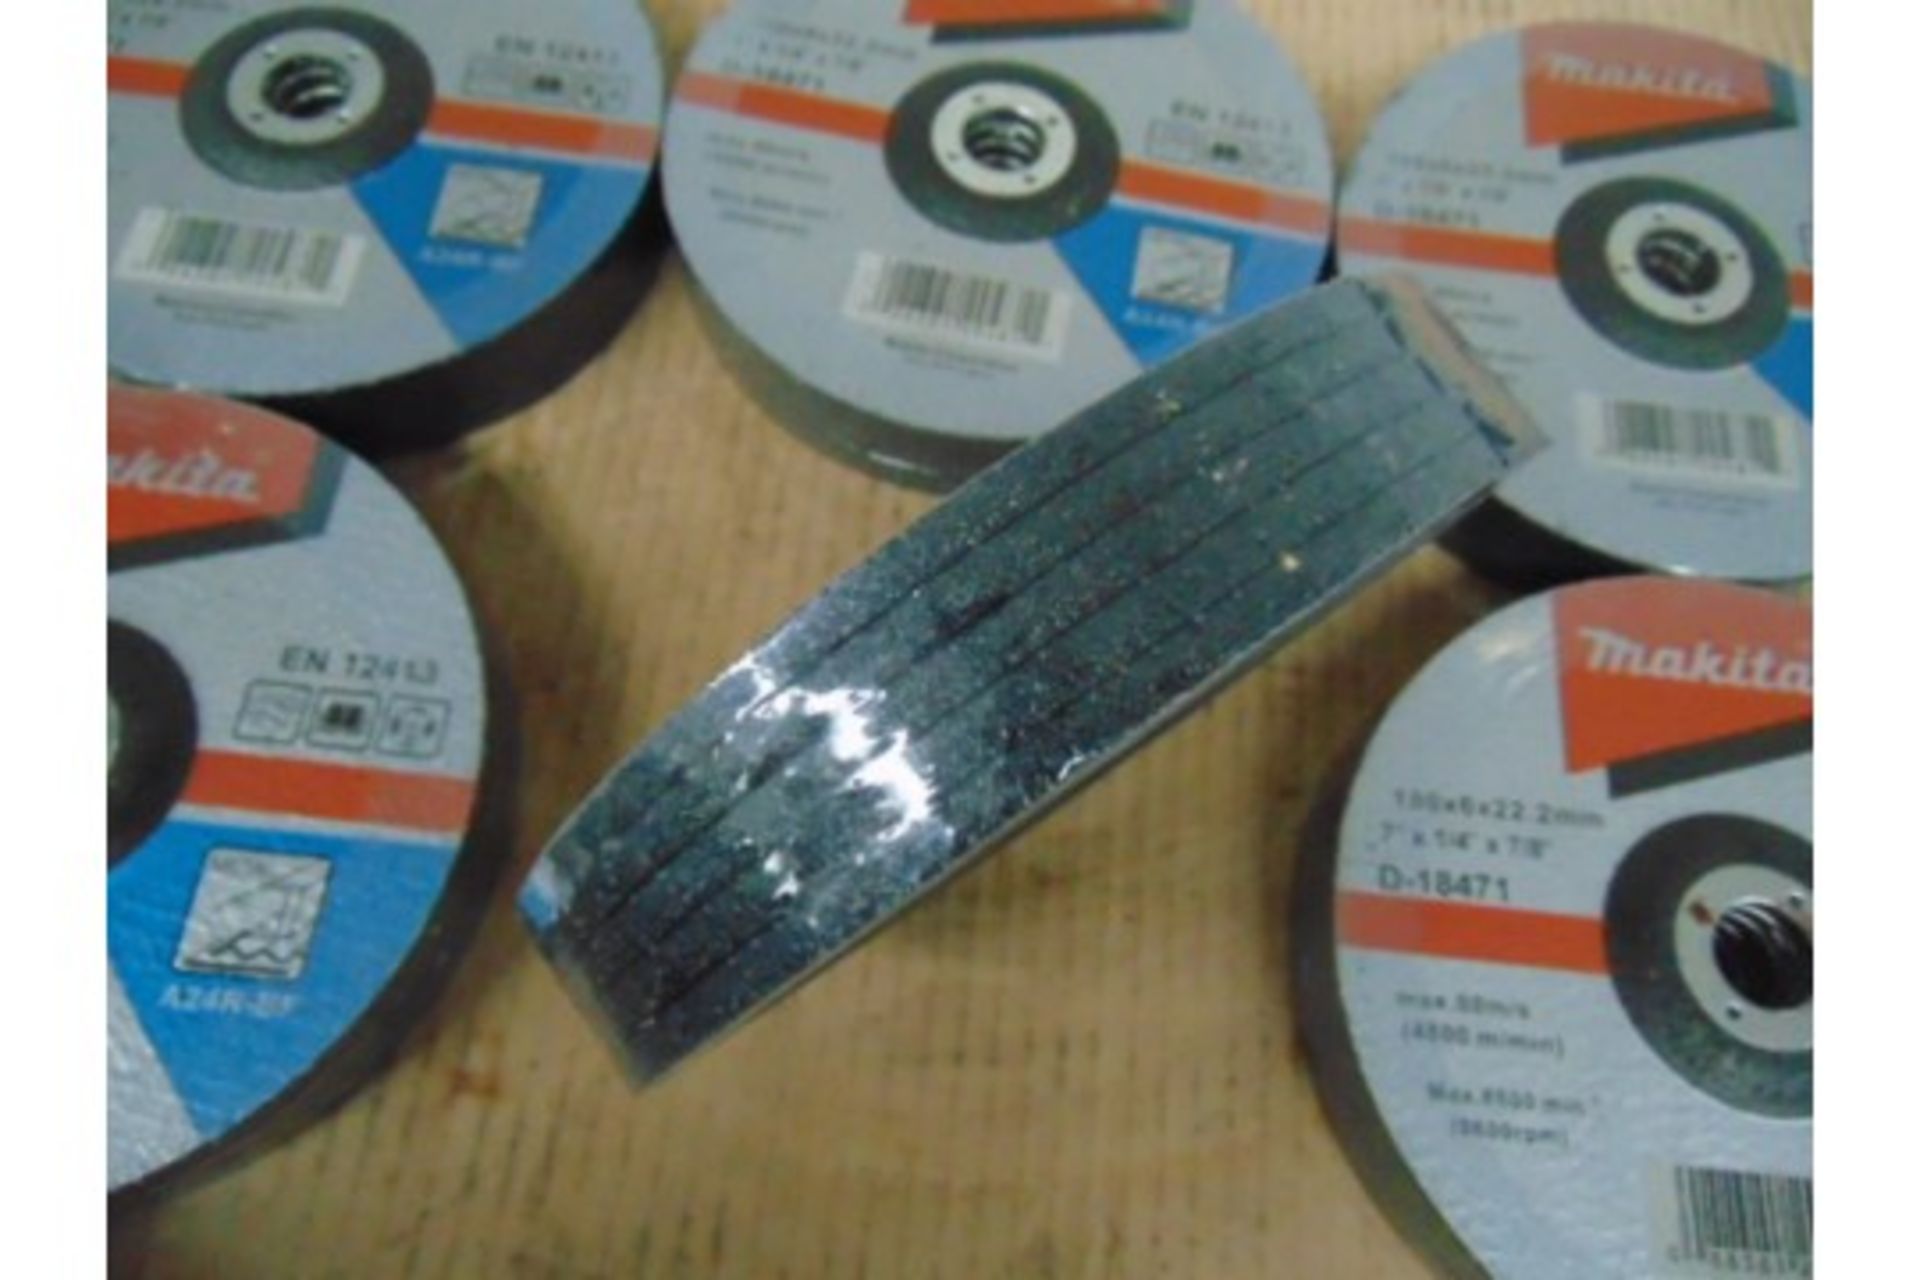 60 x Makita Metal Grinding Disc 180 x 6 x 22.2 A24R-BF D-18471 - Image 4 of 4